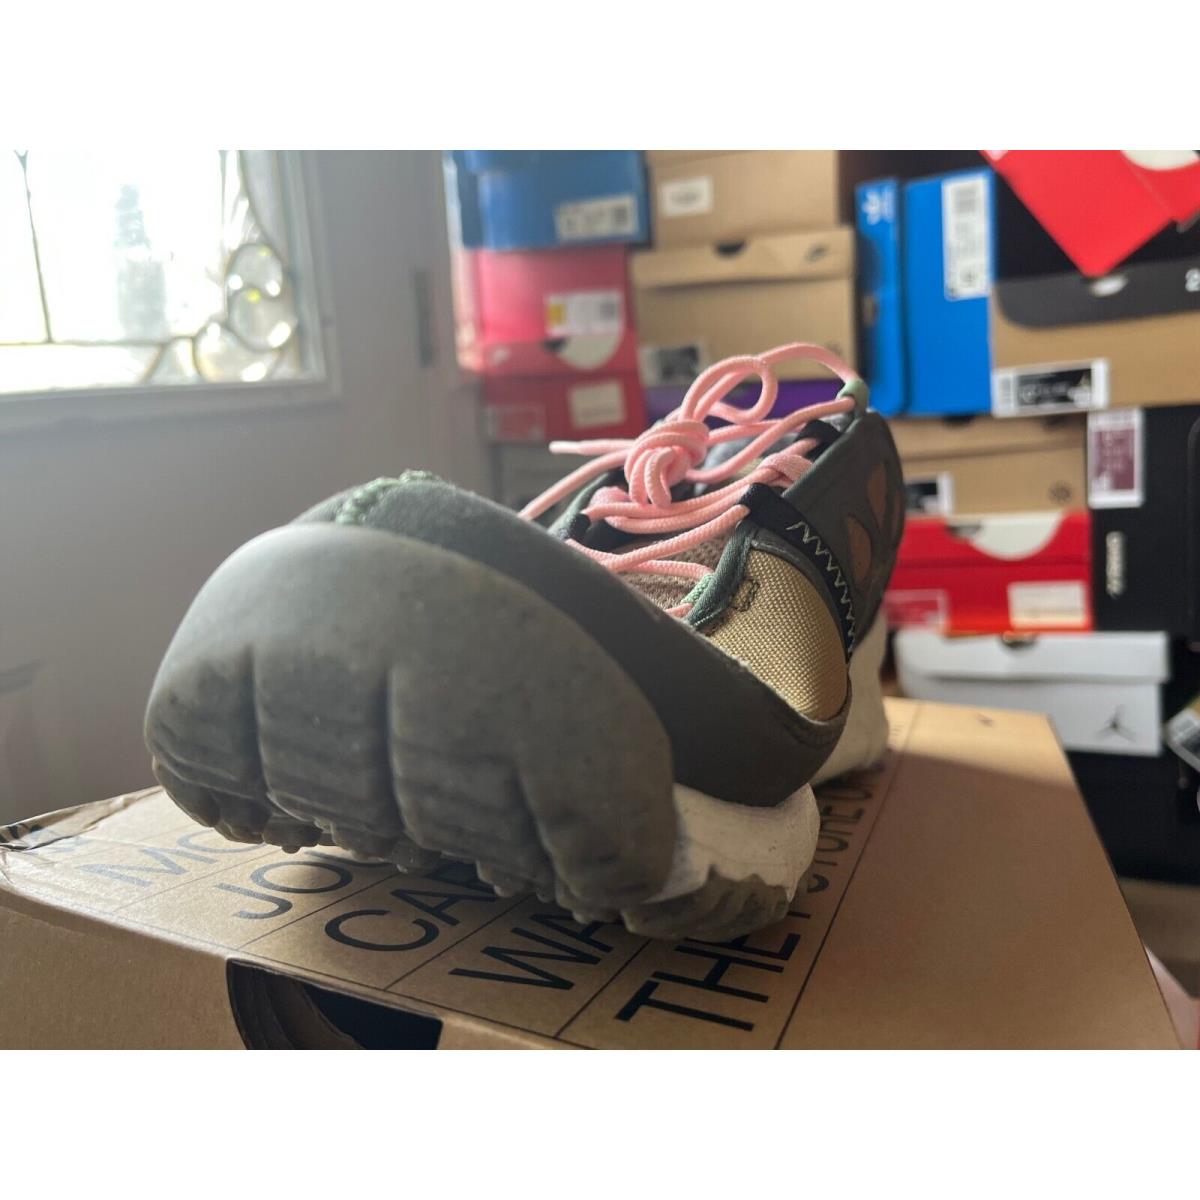 Nike shoes  - Brown Kelp/Pink Glaze-Sequoia 7